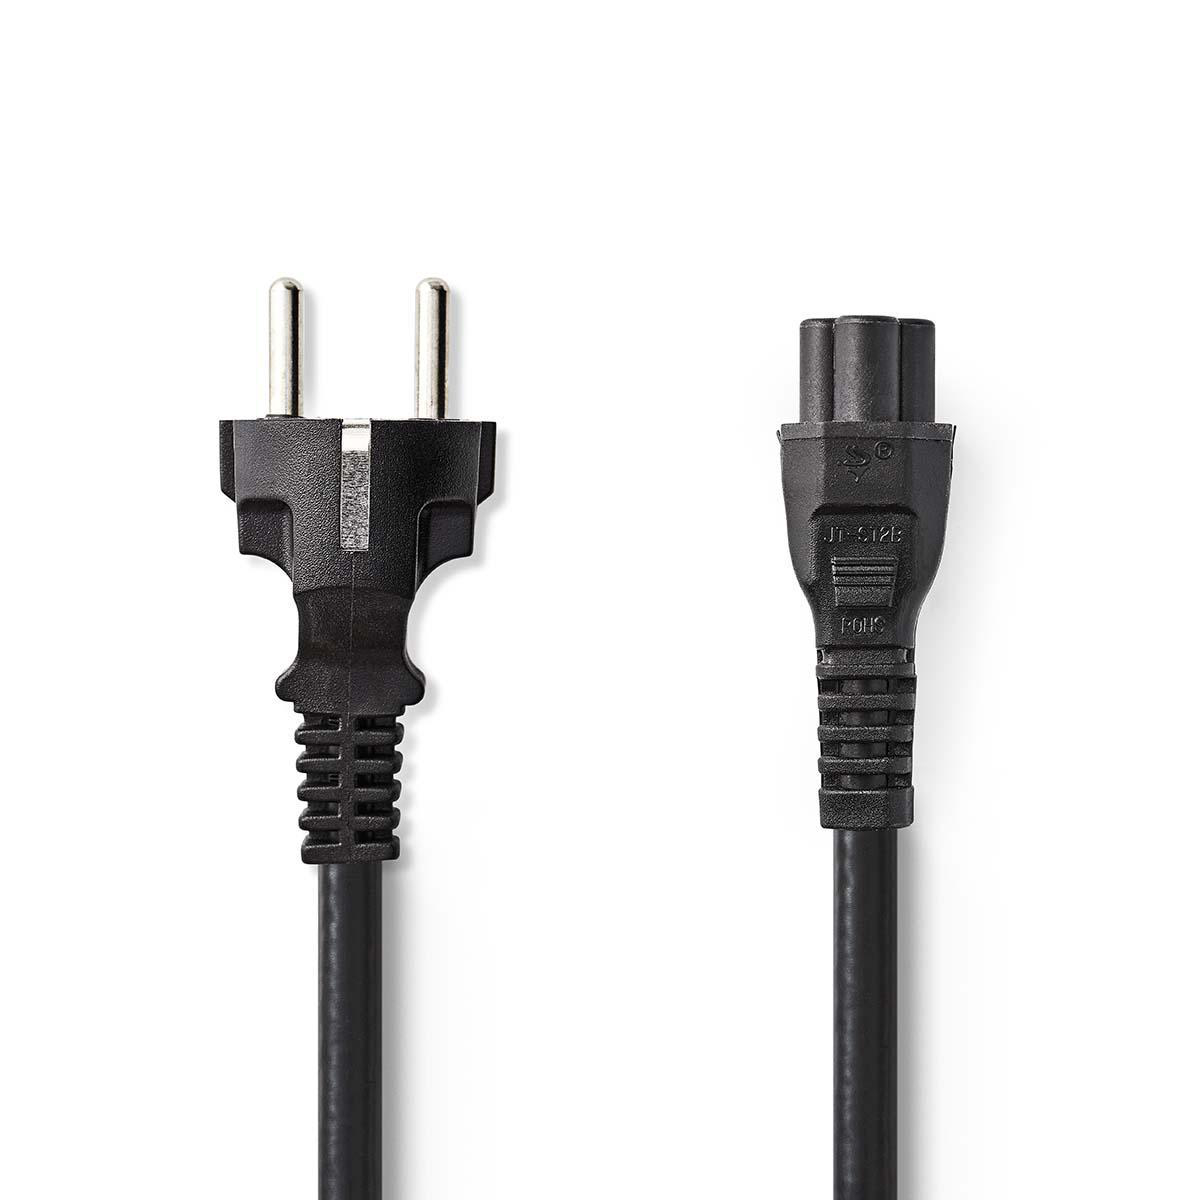 Nedis napájecí kabel zástrčka UNISCHUKO - IEC320-C5 mickey mouse černá, 3 m (CEGP10130BK30)